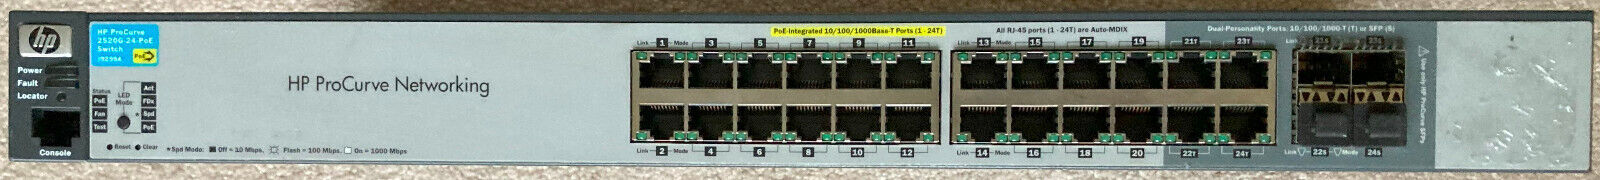 HP 2520G-24-PoE 24 Port fully managed gigabit PoE switch J9299A